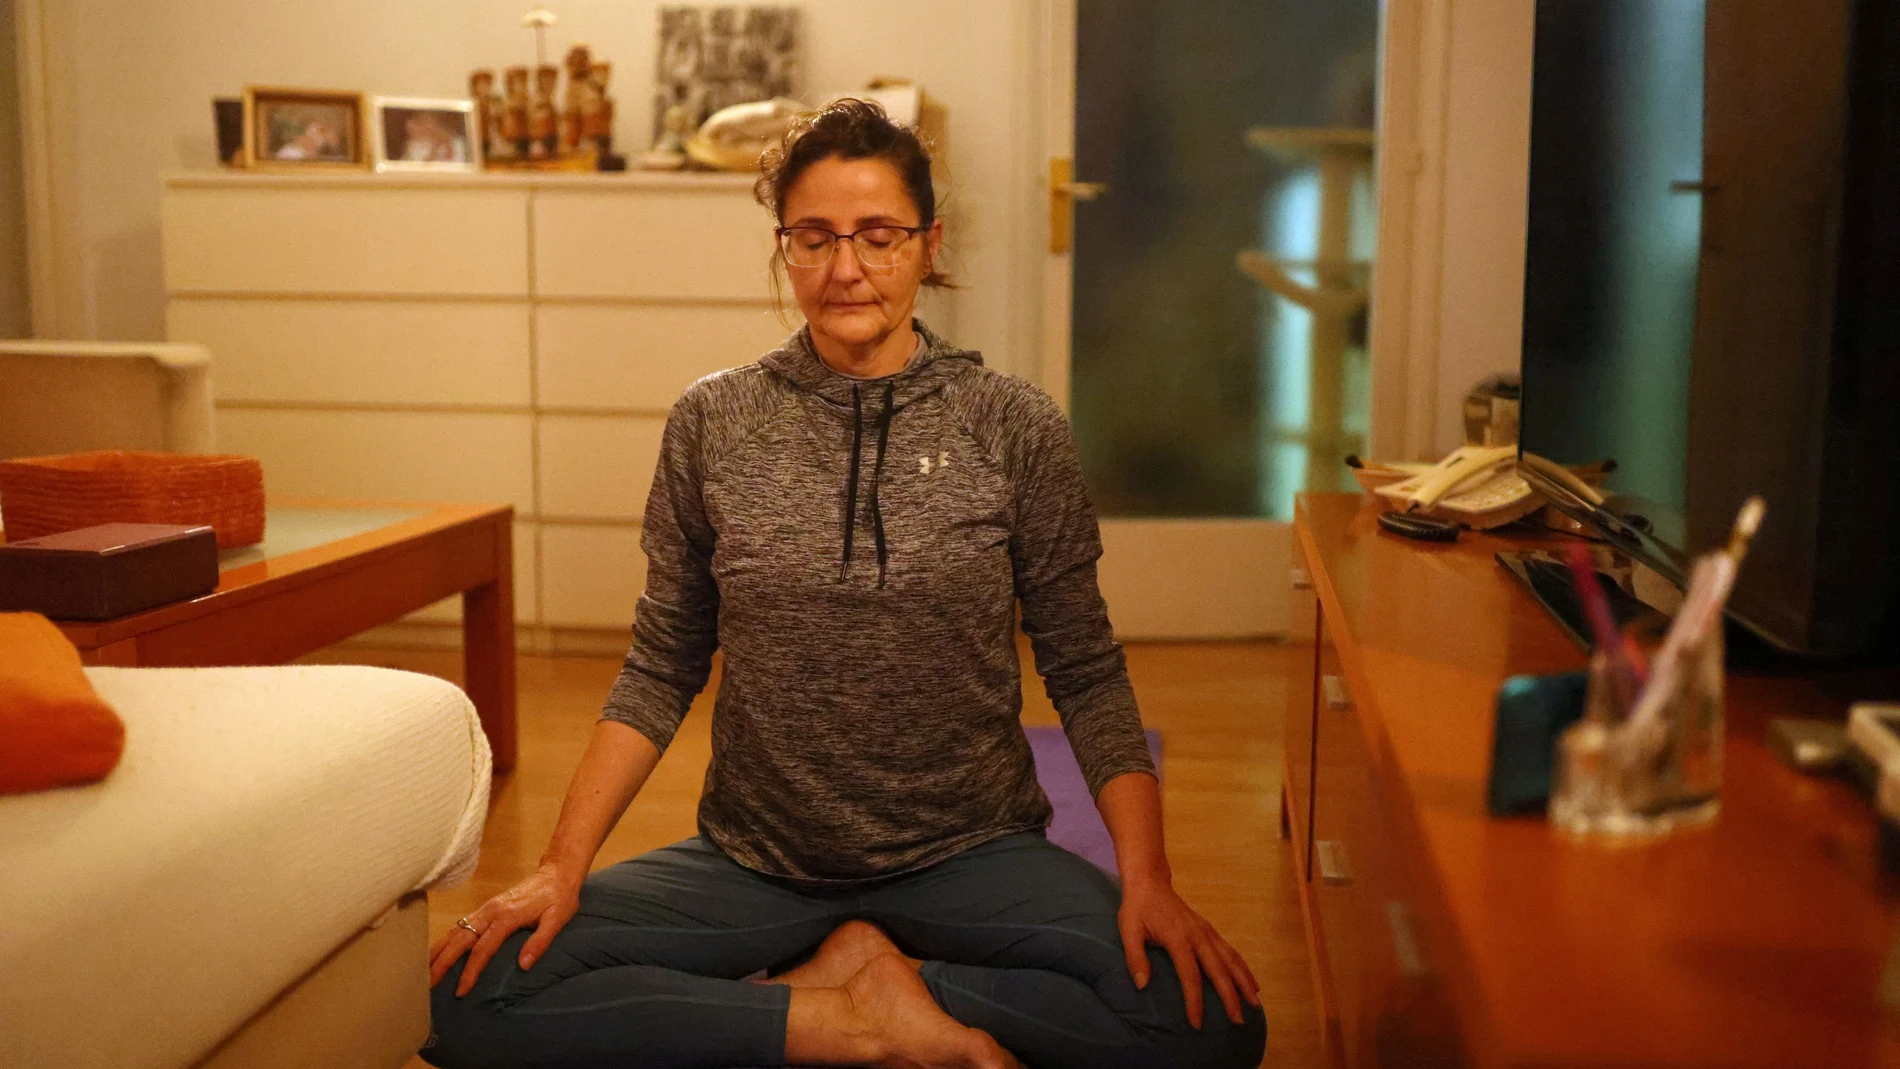 Una mujer realiza una postura de yoga